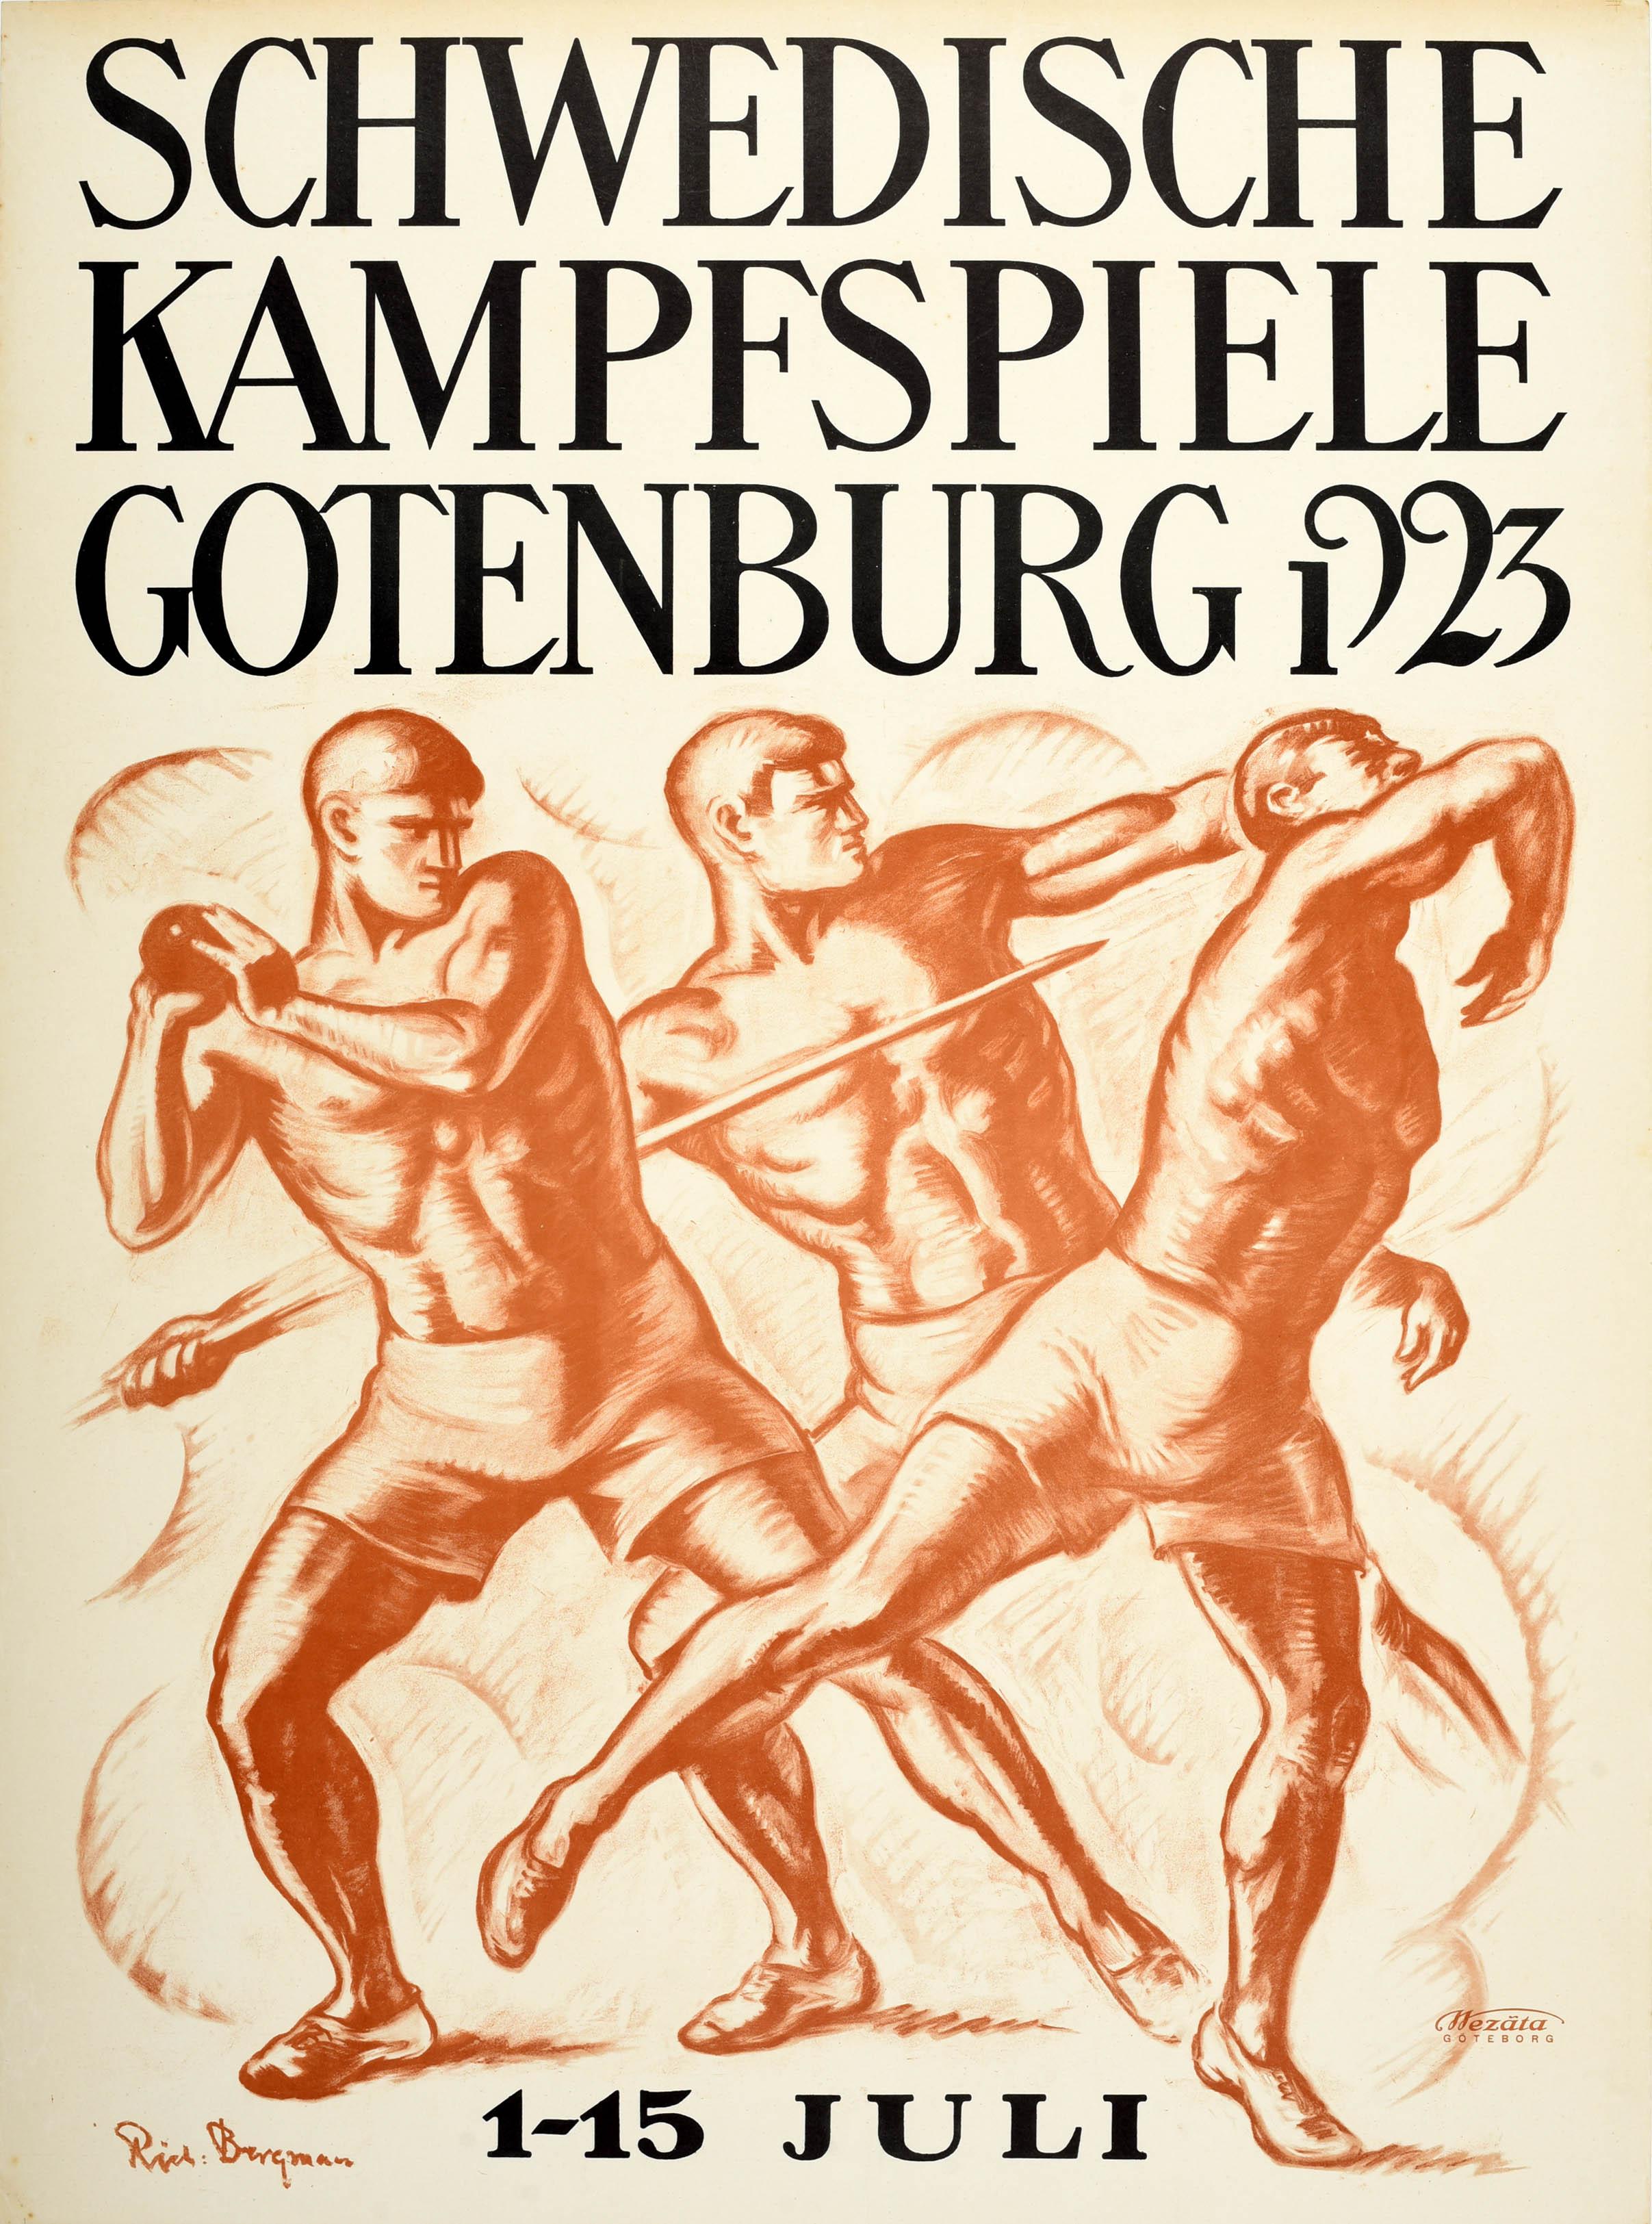 Rich Bergman Print - Original Vintage Sport Poster Swedish Fighting Games Gothenburg 1923 Sweden